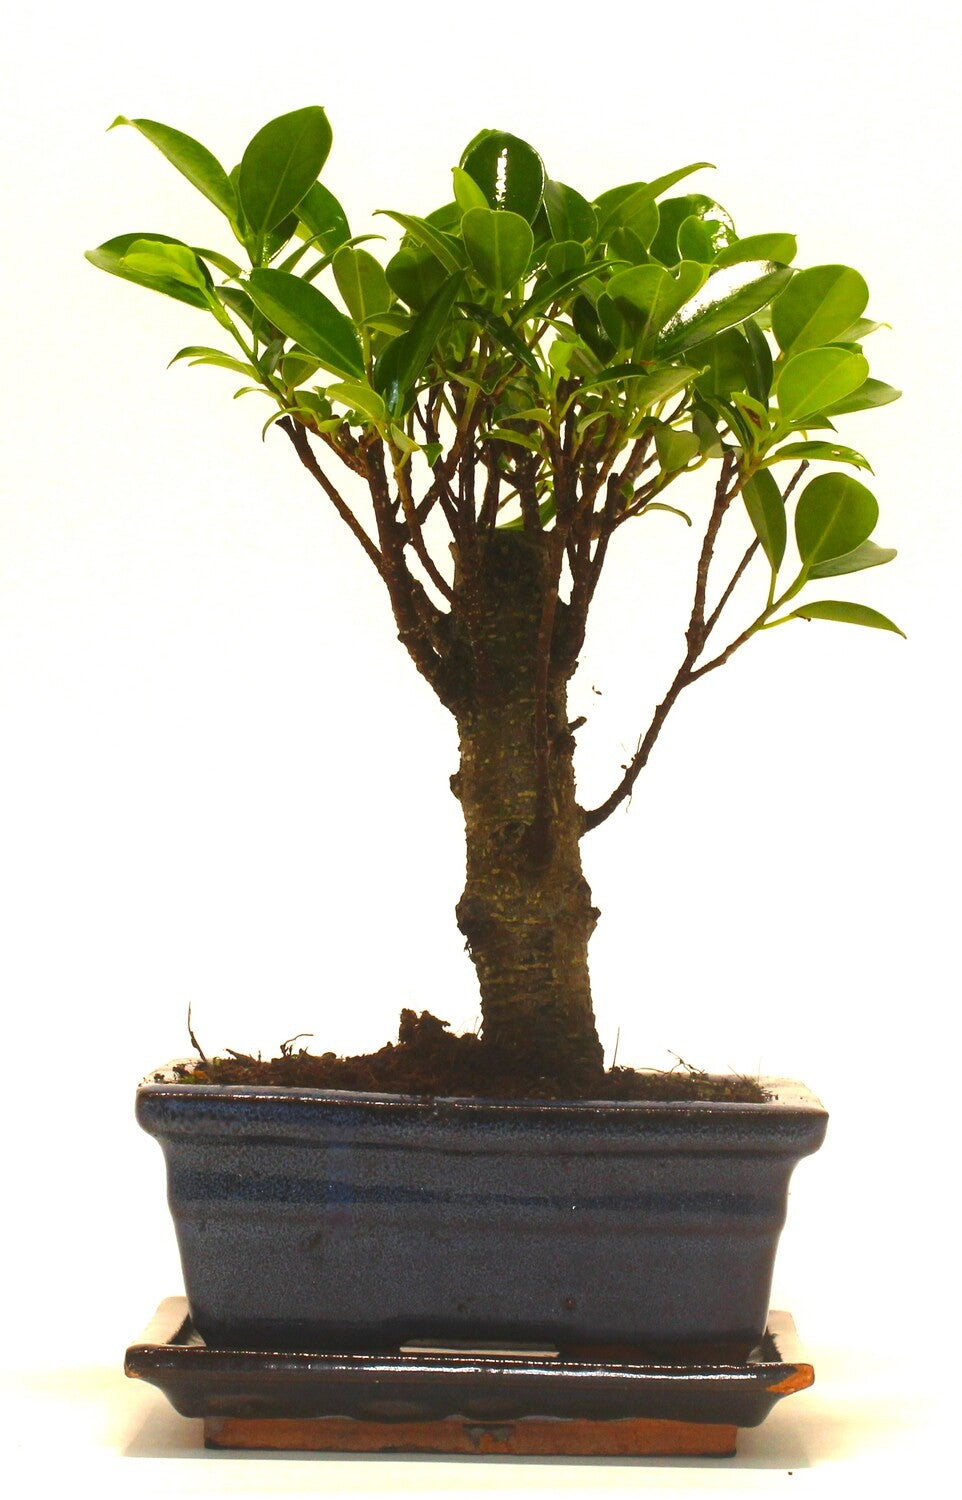 Ficus Retusa (Fig) Bonsai Tree Broom Style - 15cm ceramic pot and tray